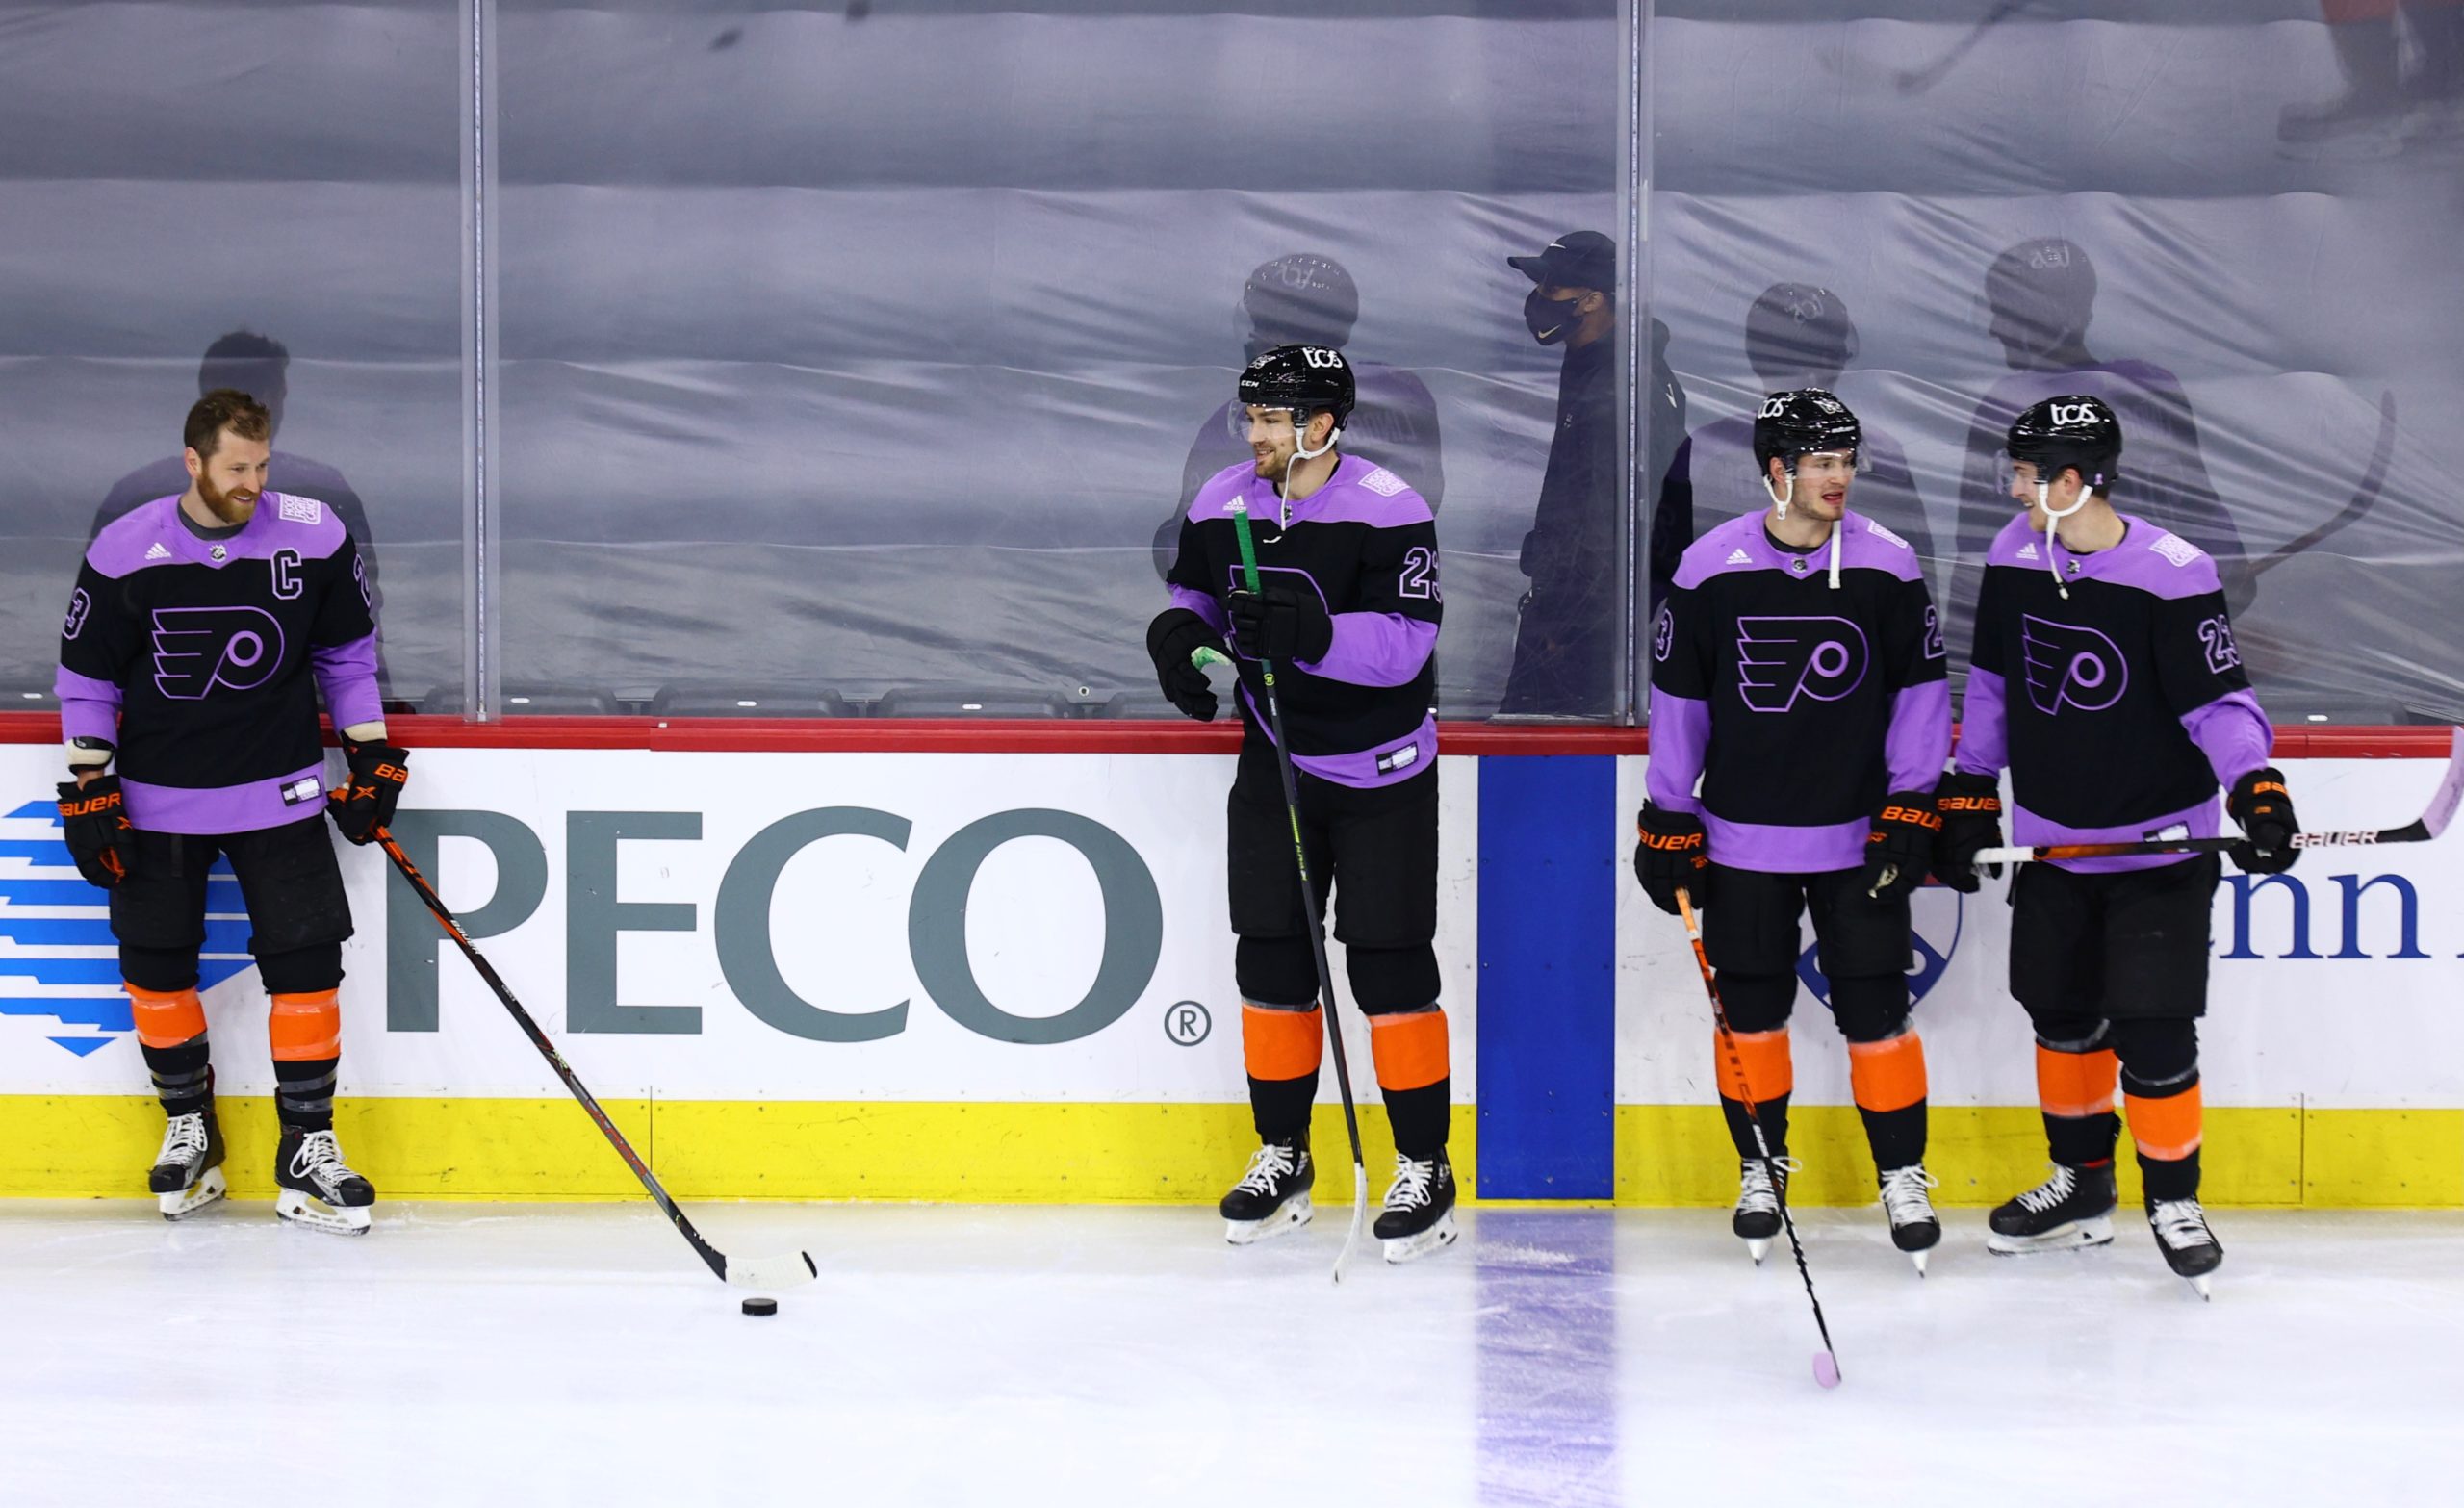 Philadelphia Flyers Hockey Fights Cancer Blank Jersey